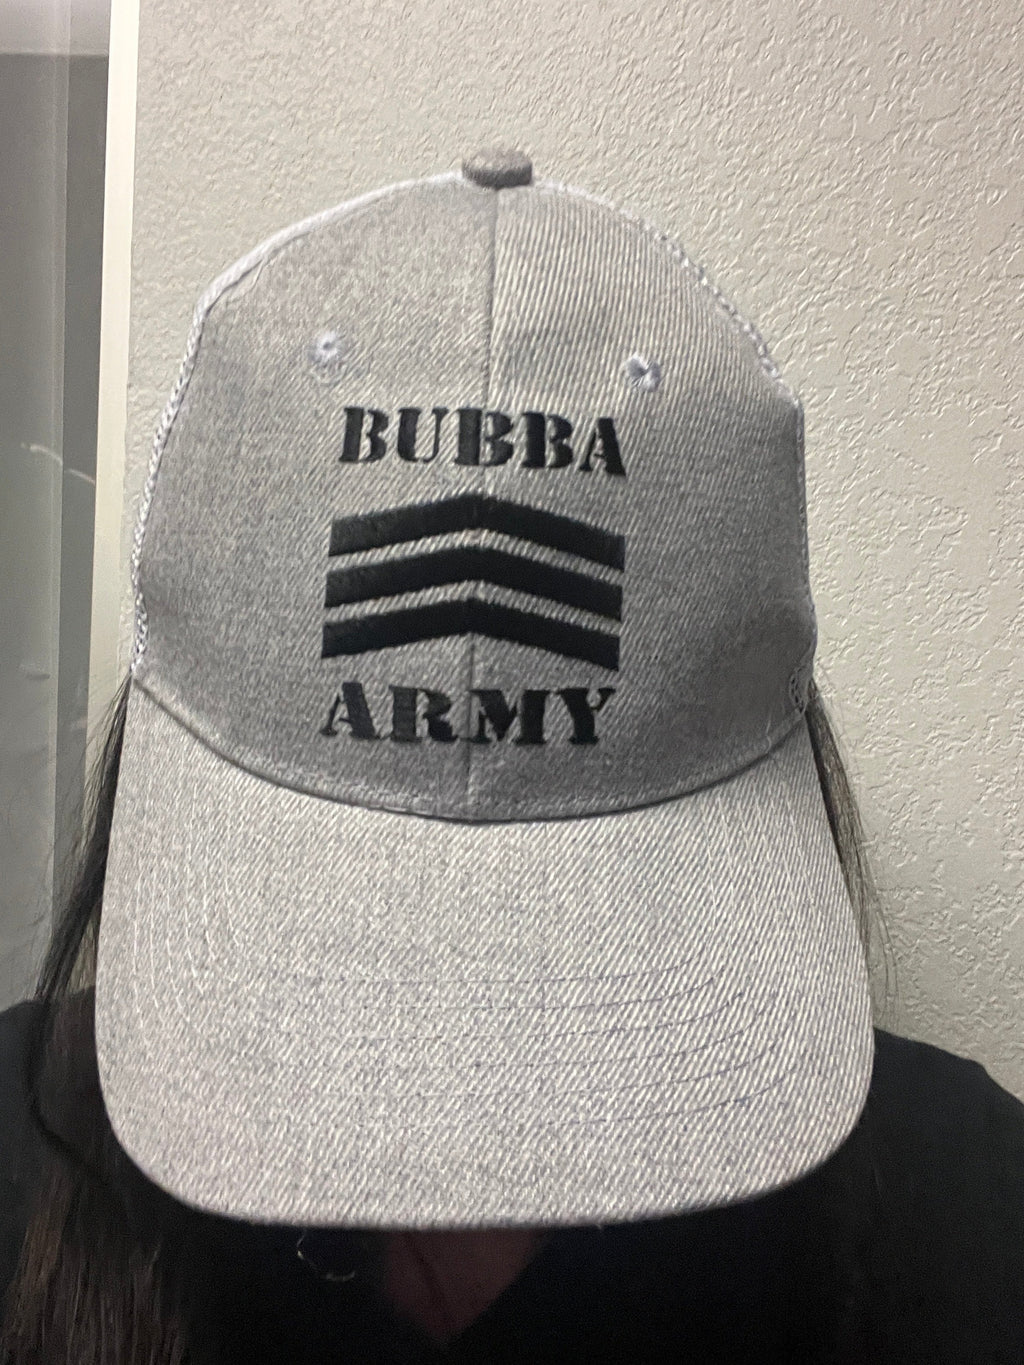 BACK BY POPULAR DEMAND! Bubba Army Outsider Lifeguard Large brim Straw